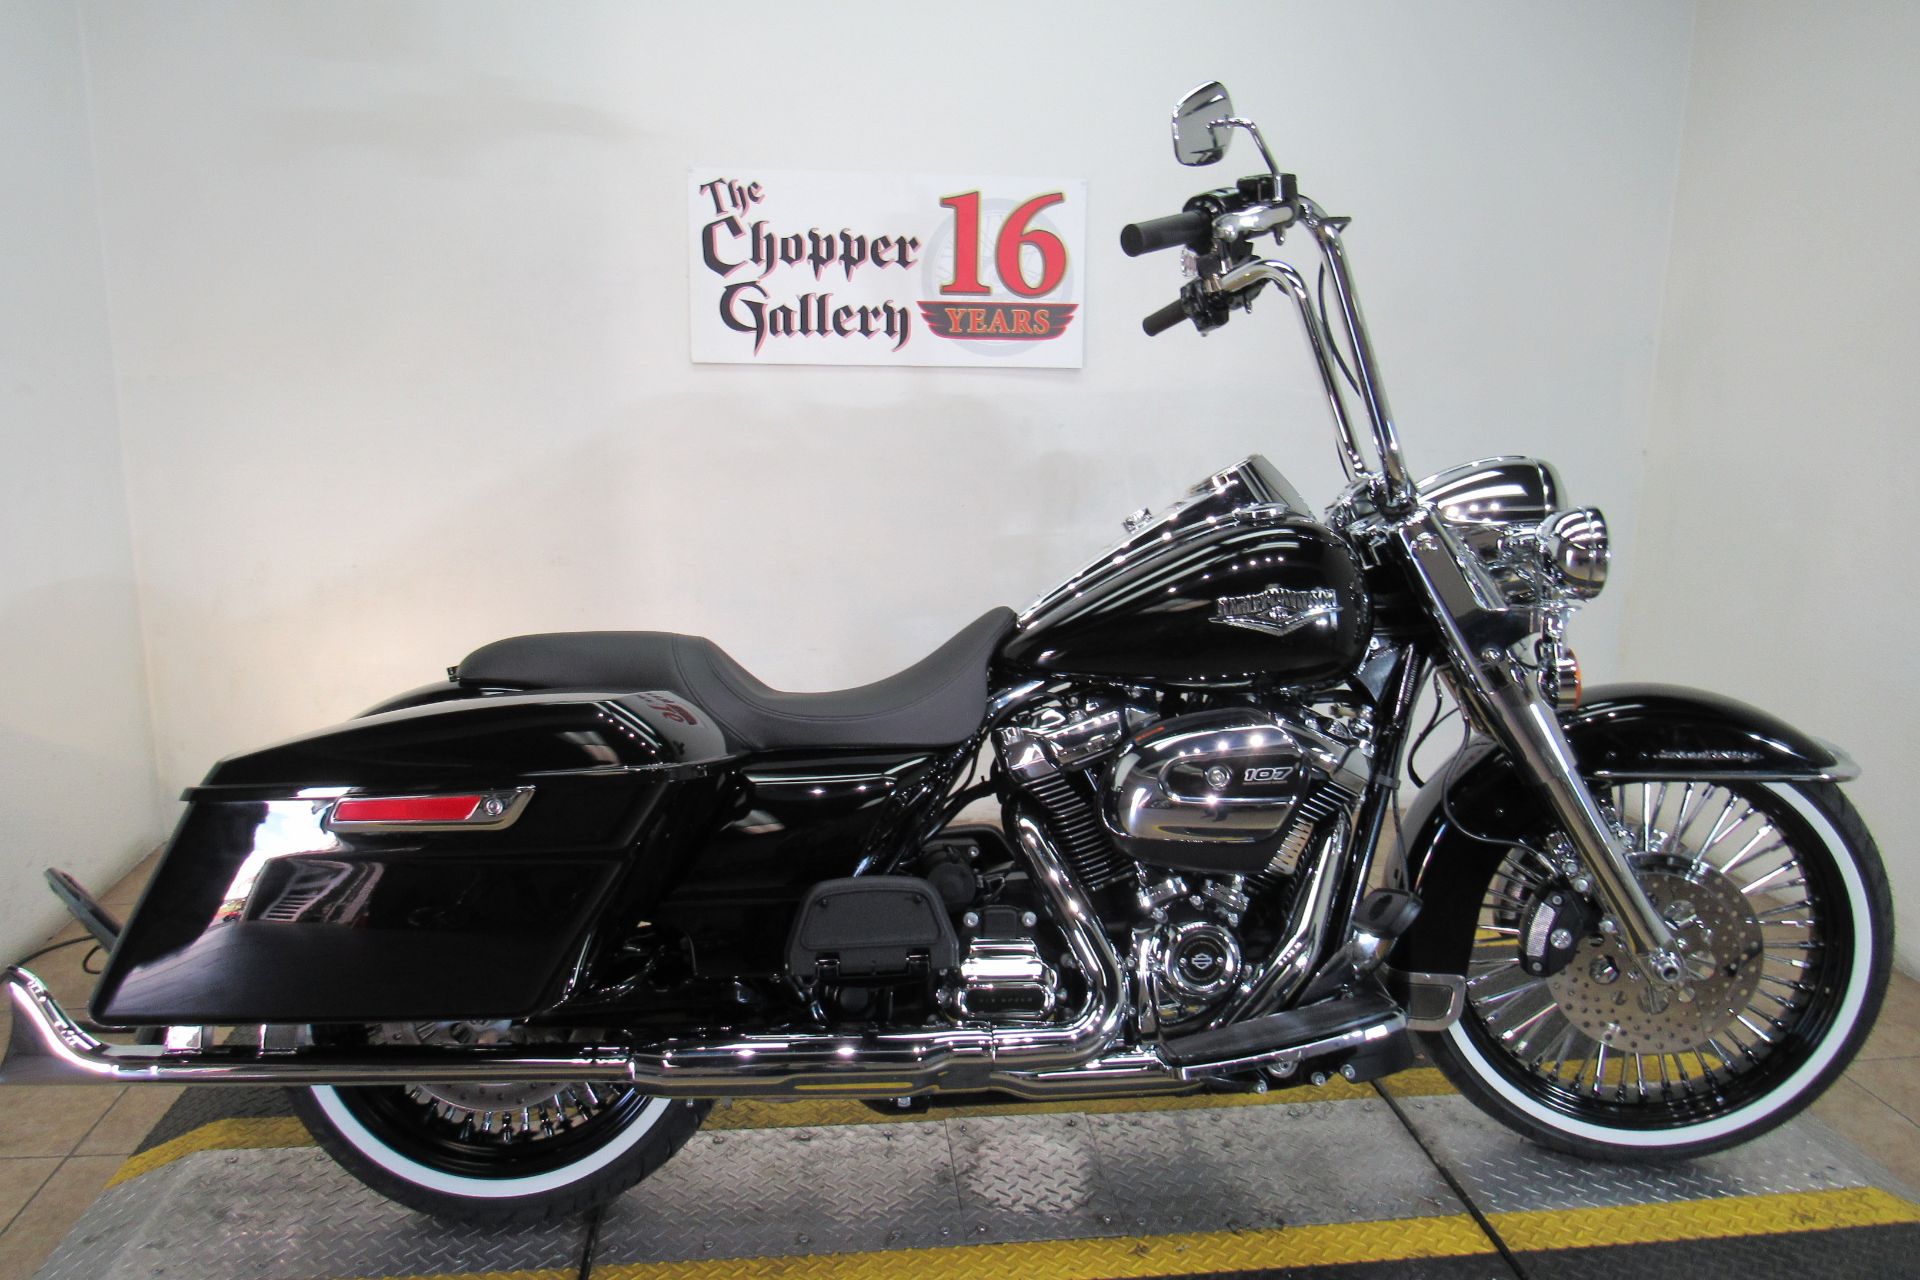 2020 Harley-Davidson Road King® in Temecula, California - Photo 11